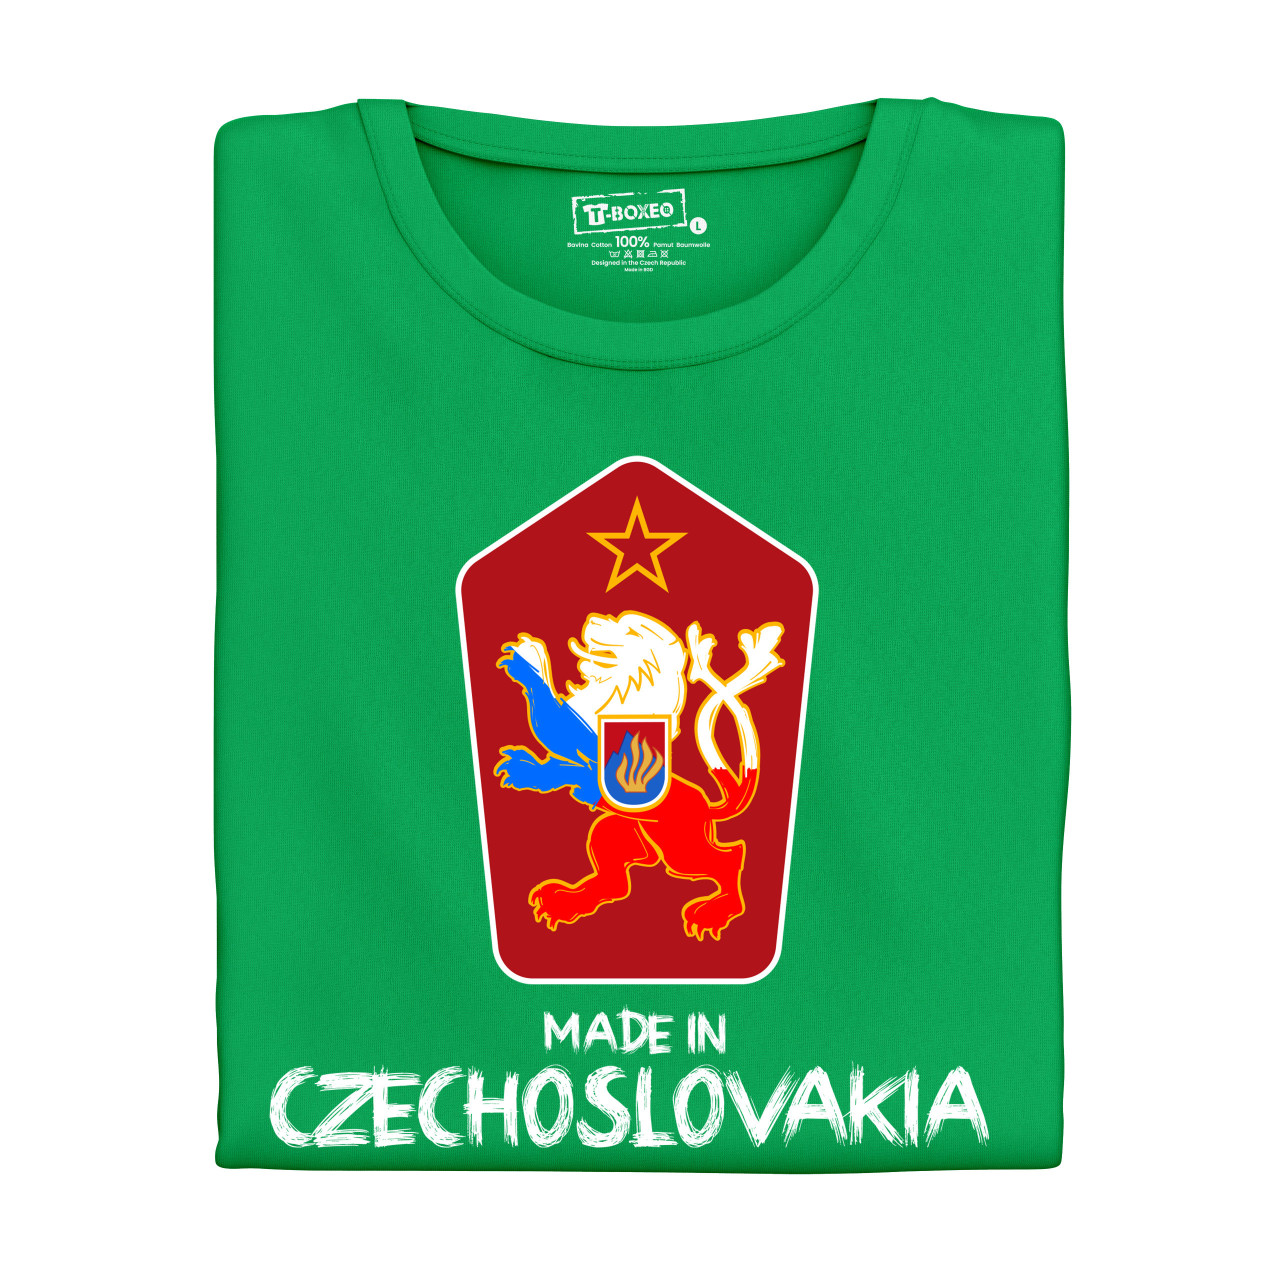 Dámské tričko s potiskem “Made in Czechoslovakia”